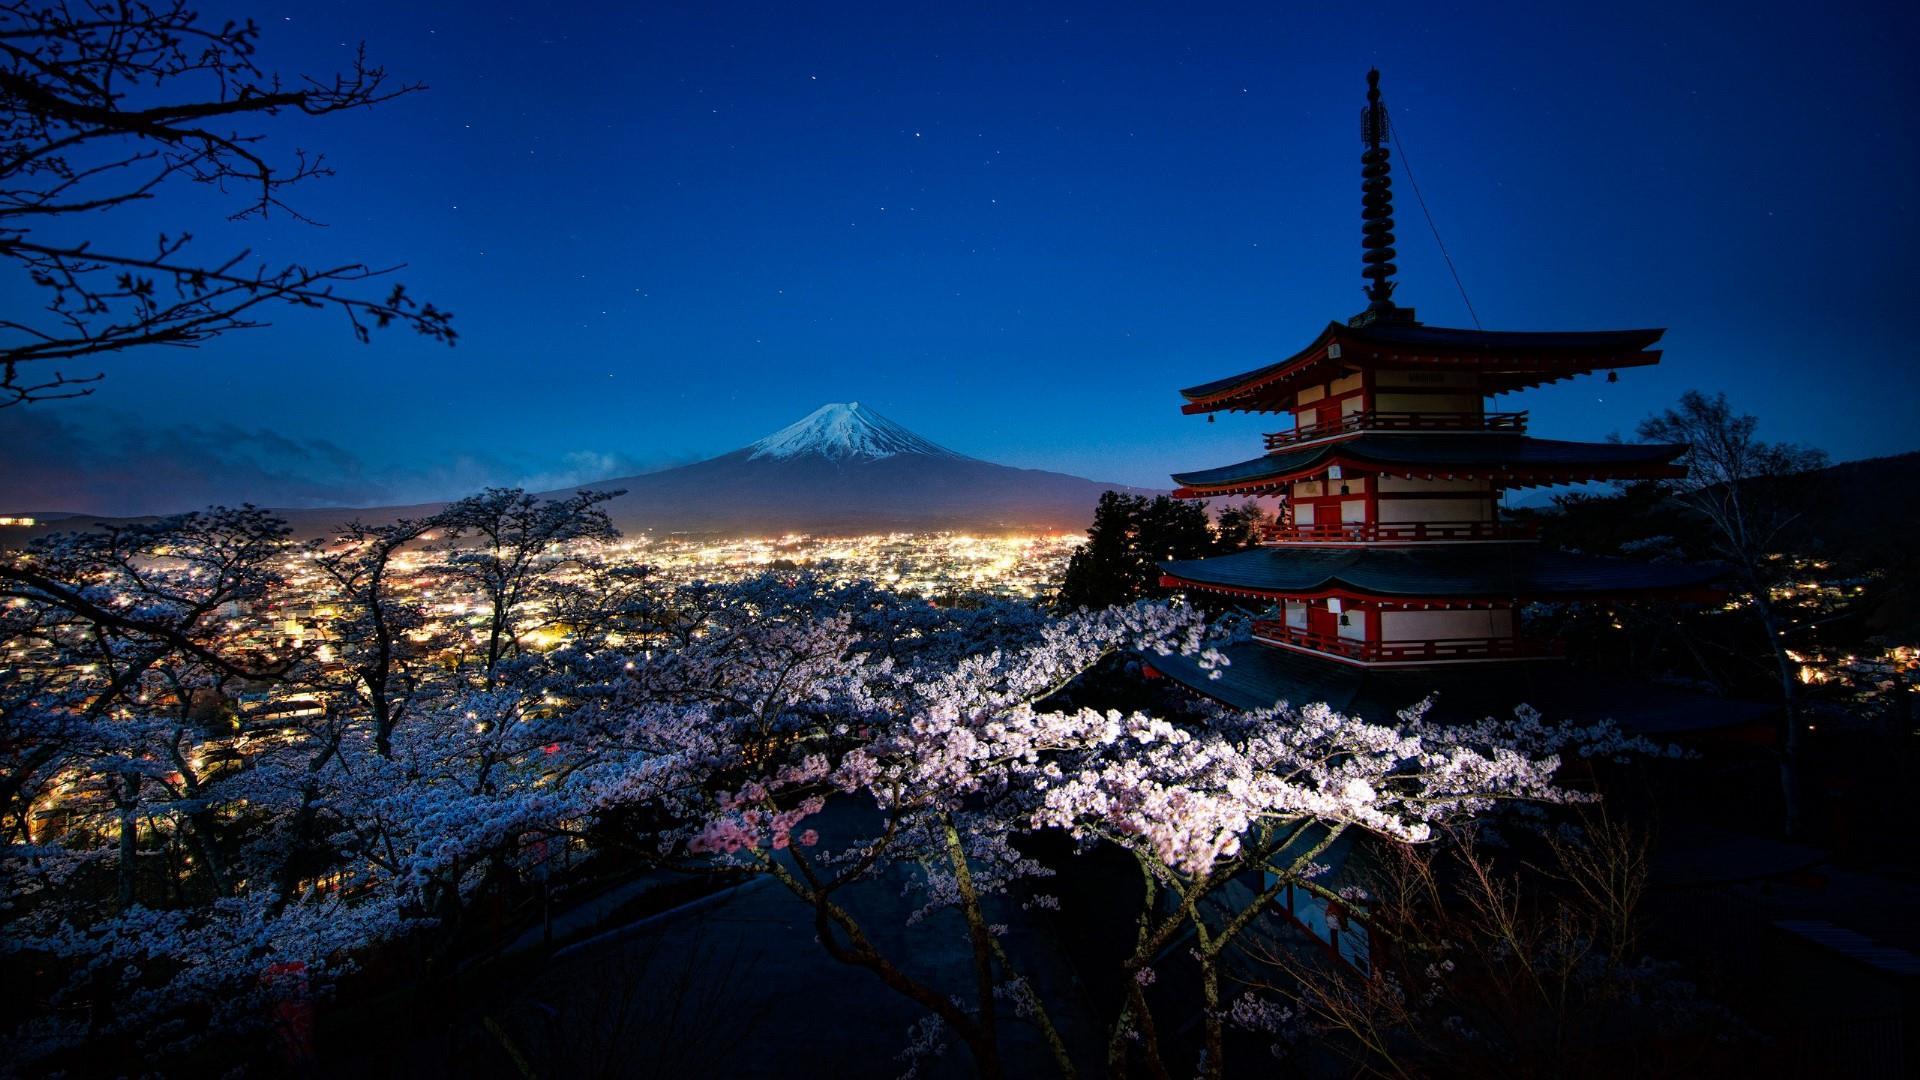 Night Mount Fuji Wallpaper Free Night Mount Fuji